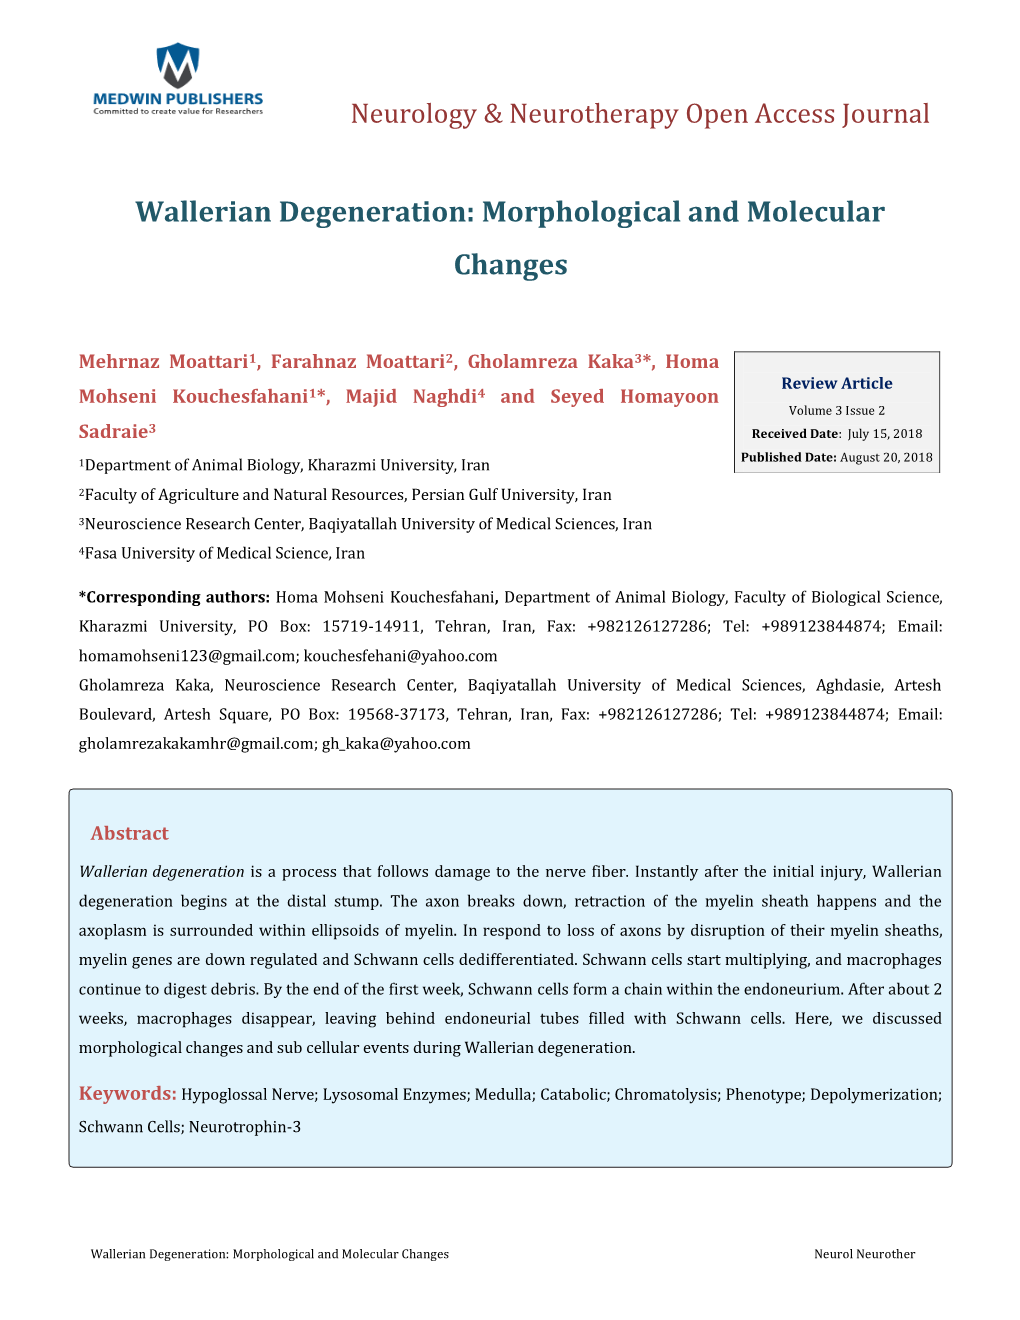 Wallerian Degeneration: Morphological and Molecular Changes